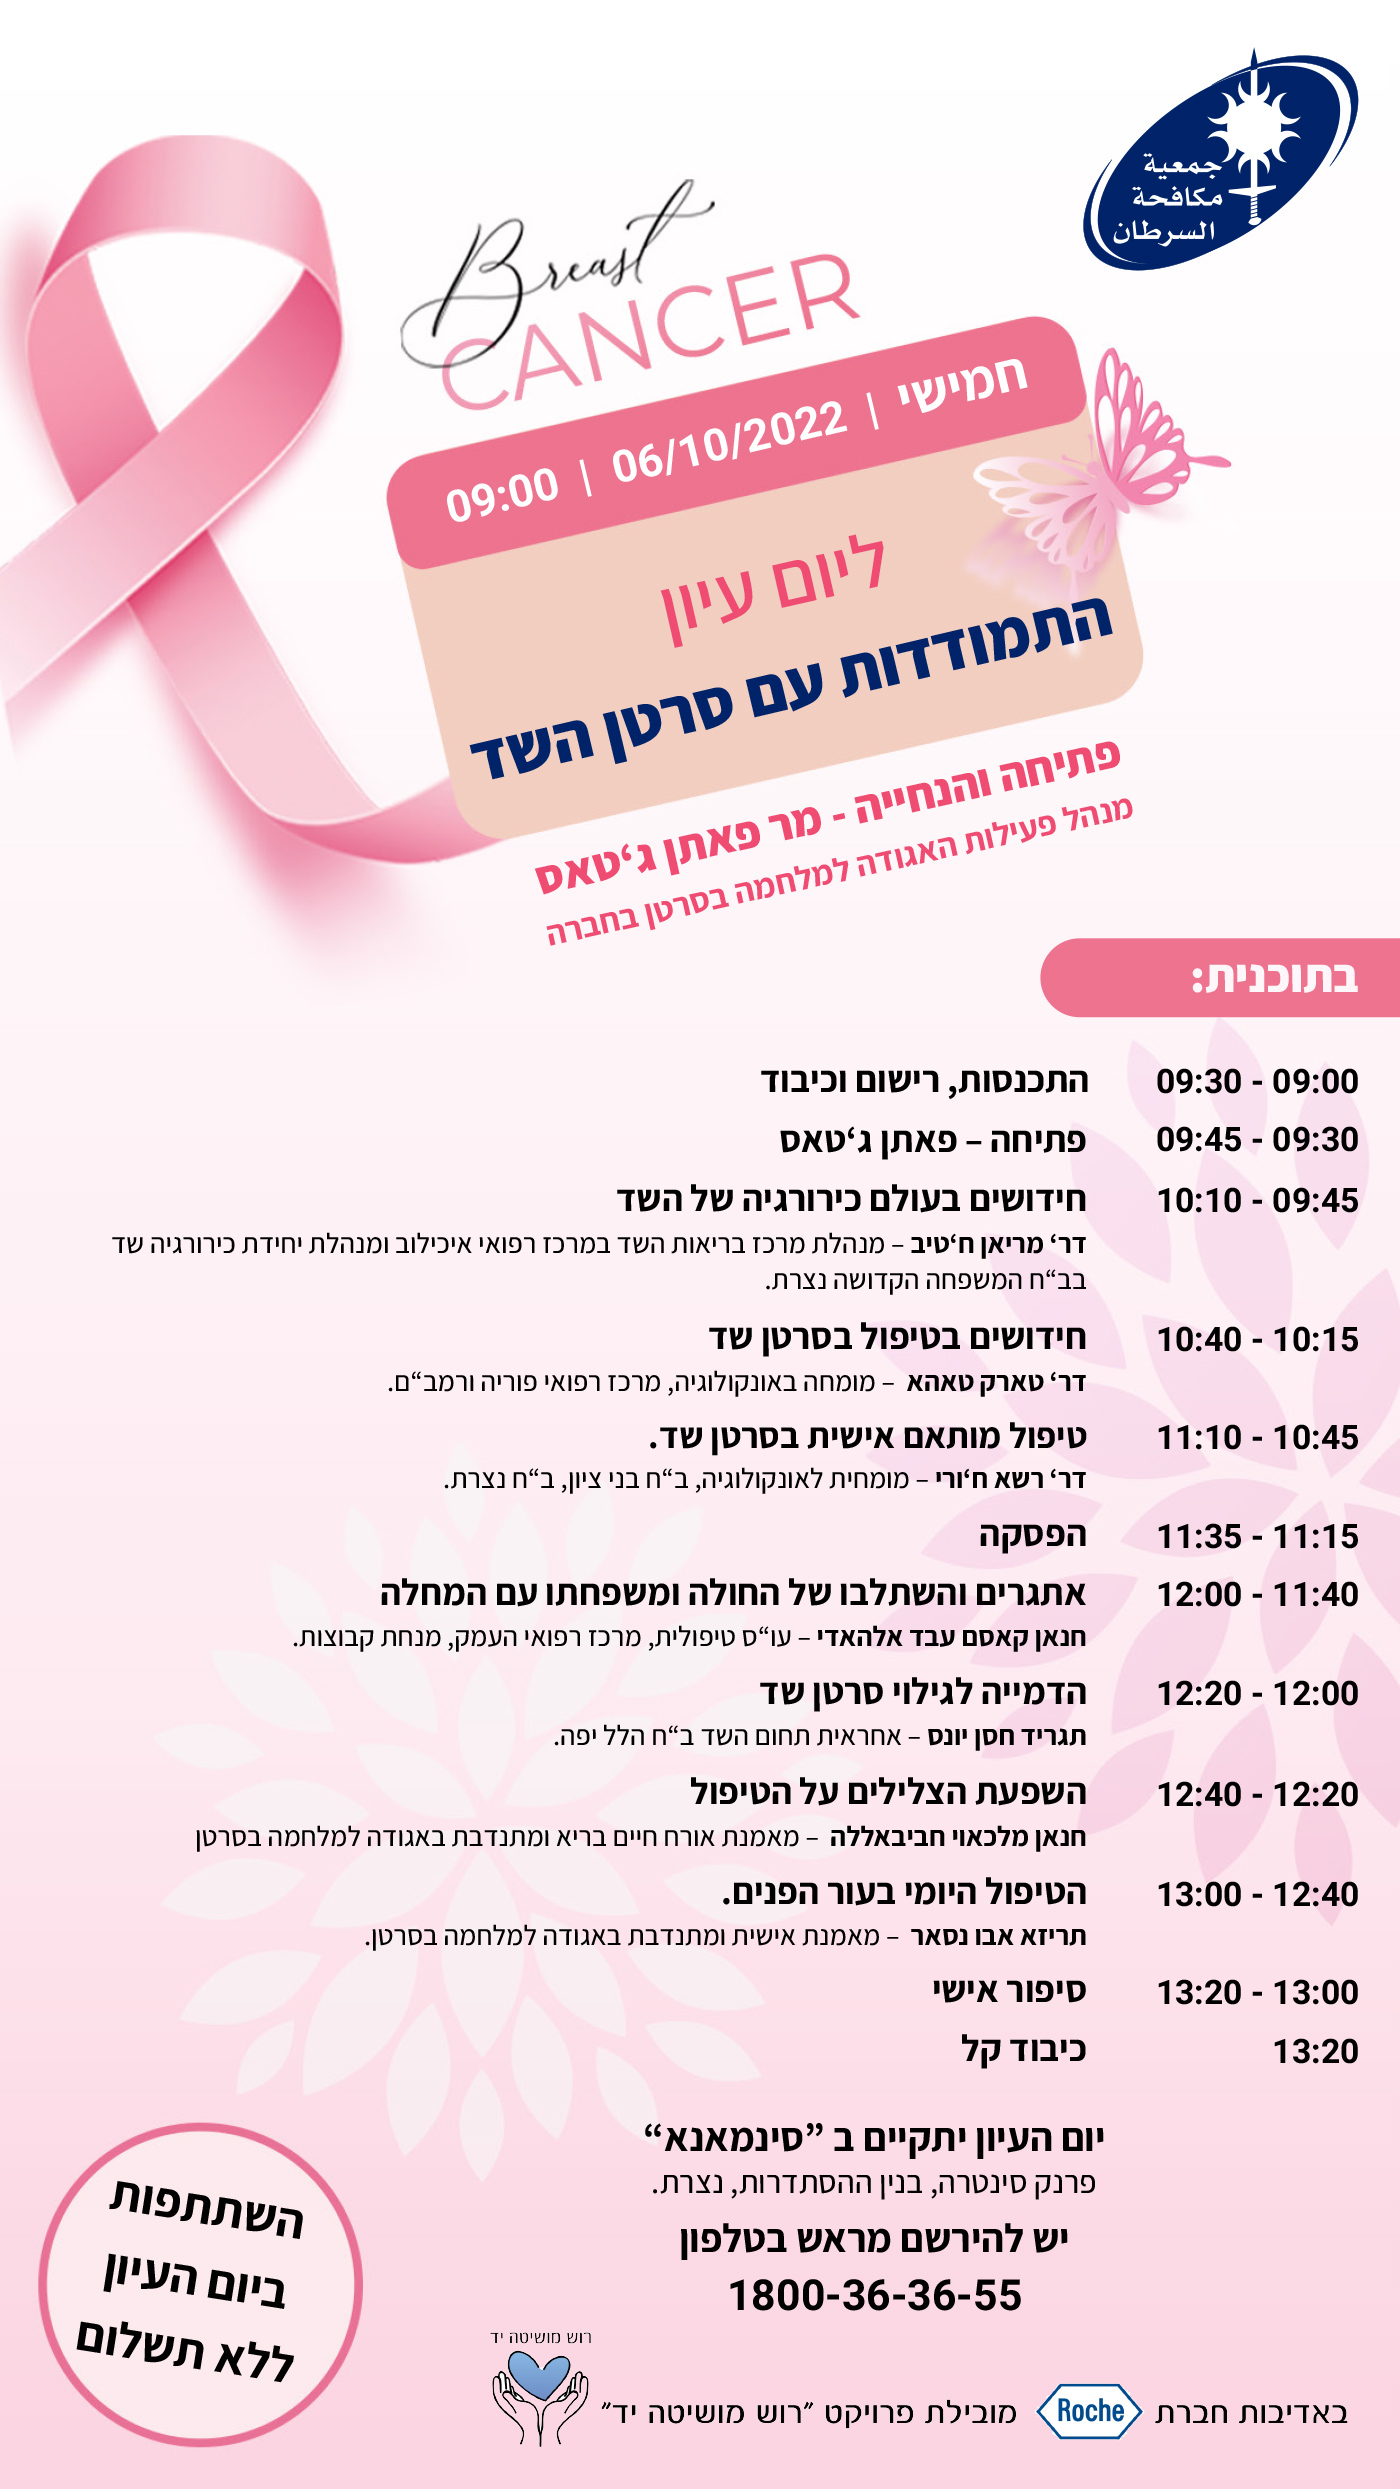 seminar invitation in Hebrew